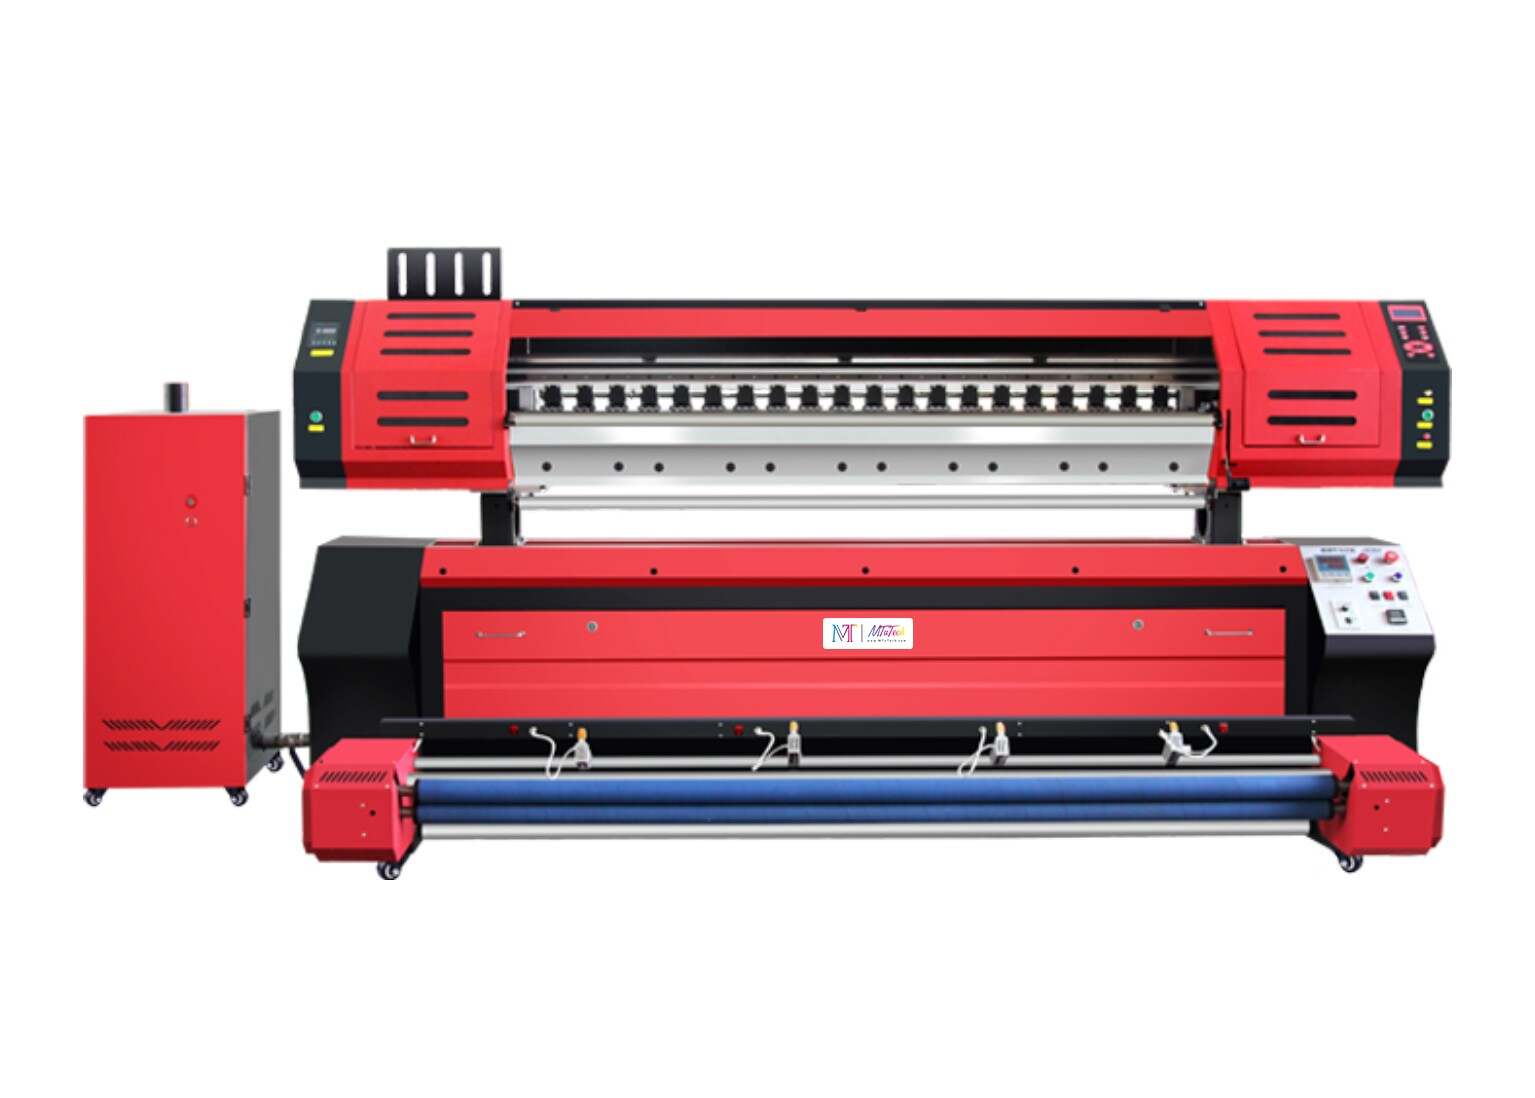 Impresora Epson i3200 de textiles digitales - LIBRO ELECTRÓNICO